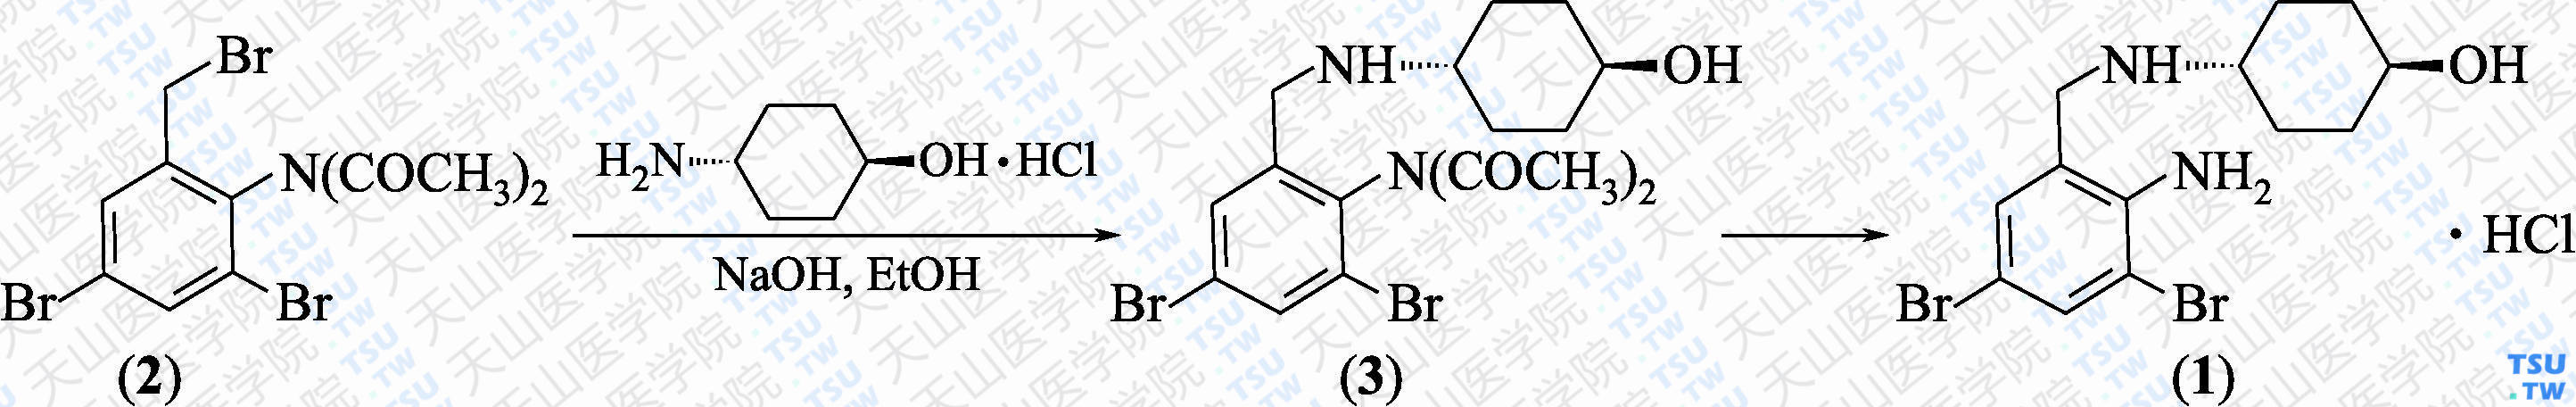 盐酸氨溴索（分子式：C<sub>13</sub>H<sub>18</sub>Br<sub>2</sub>N<sub>2</sub>O·HCl）的合成方法路线及其结构式